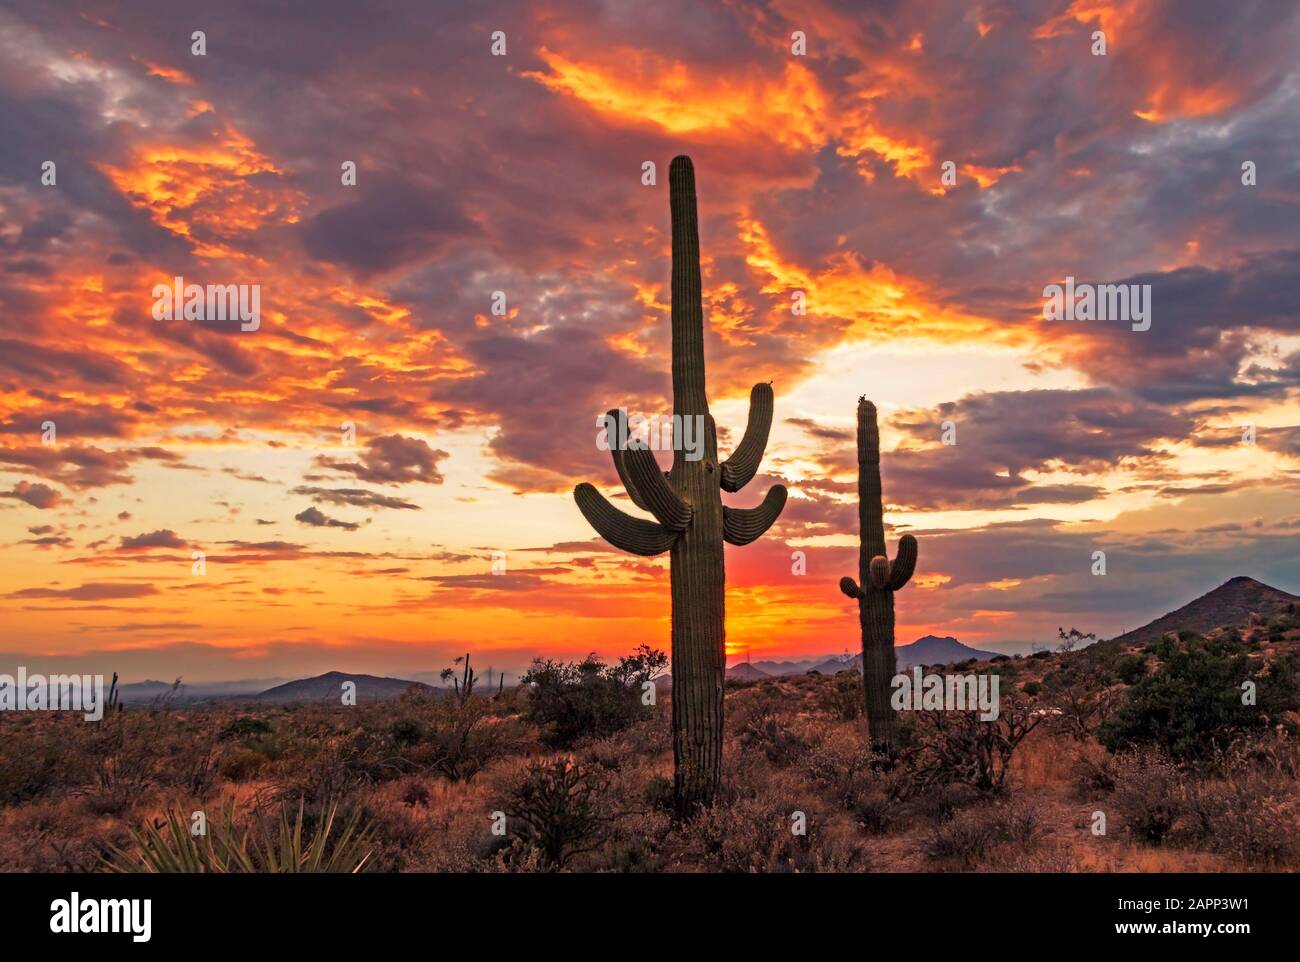 Sonnenuntergang in Arizona mit brennendem Himmel und Kakteenpflanzen Stockfoto